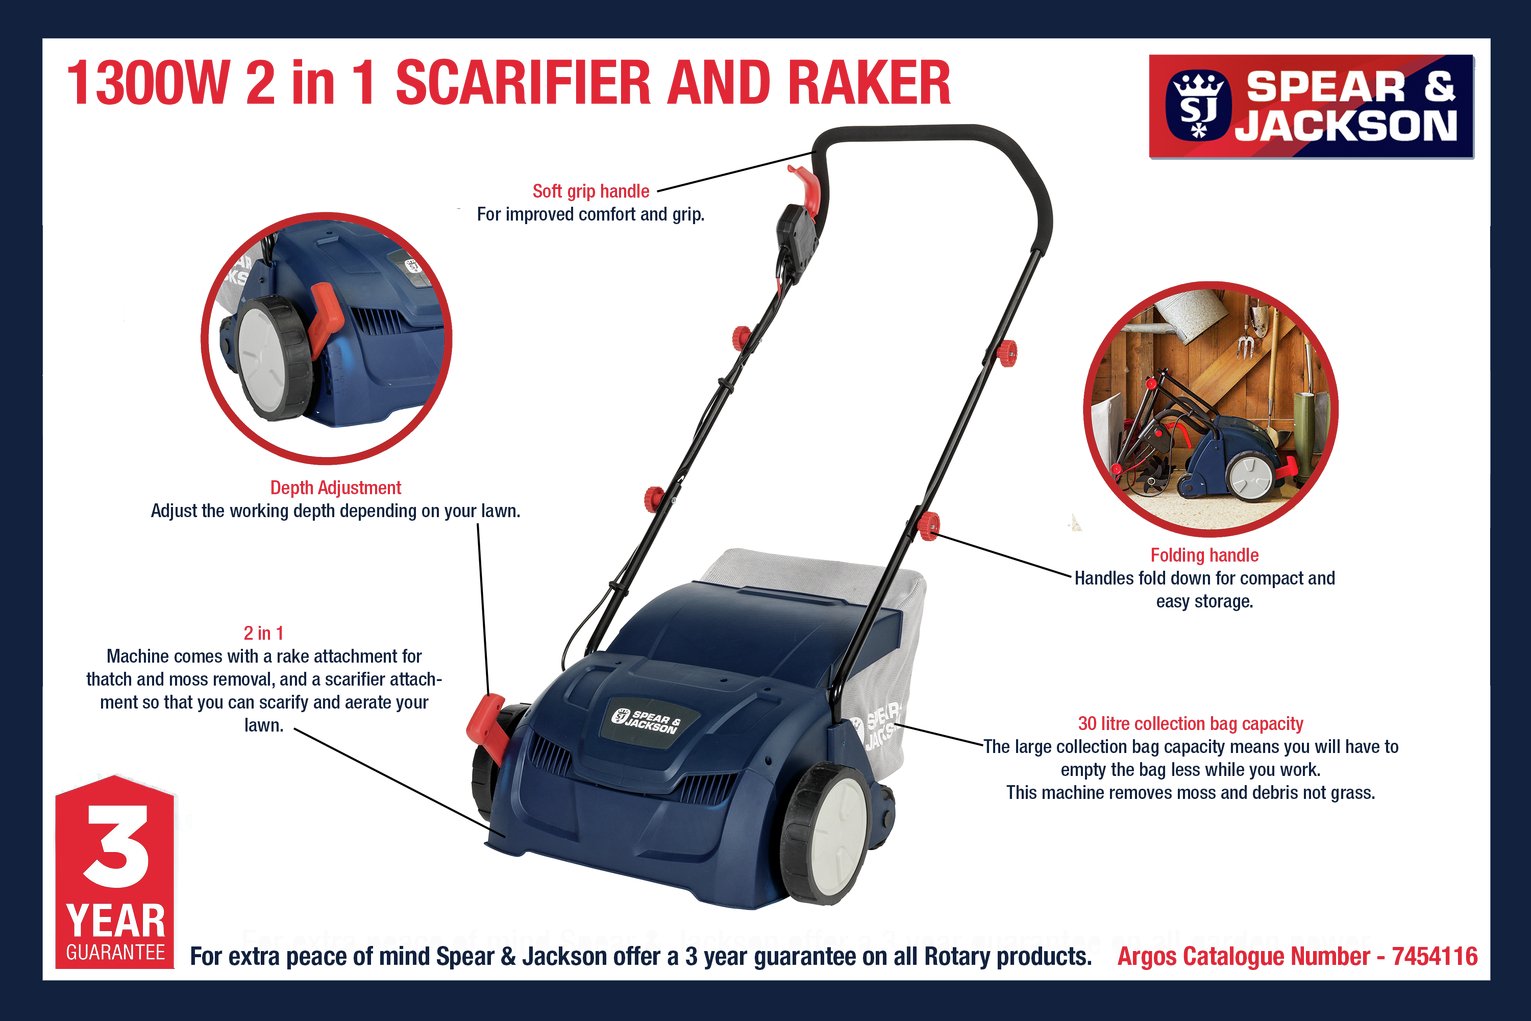 Spear & Jackson S13SC Scarifier and Raker Review